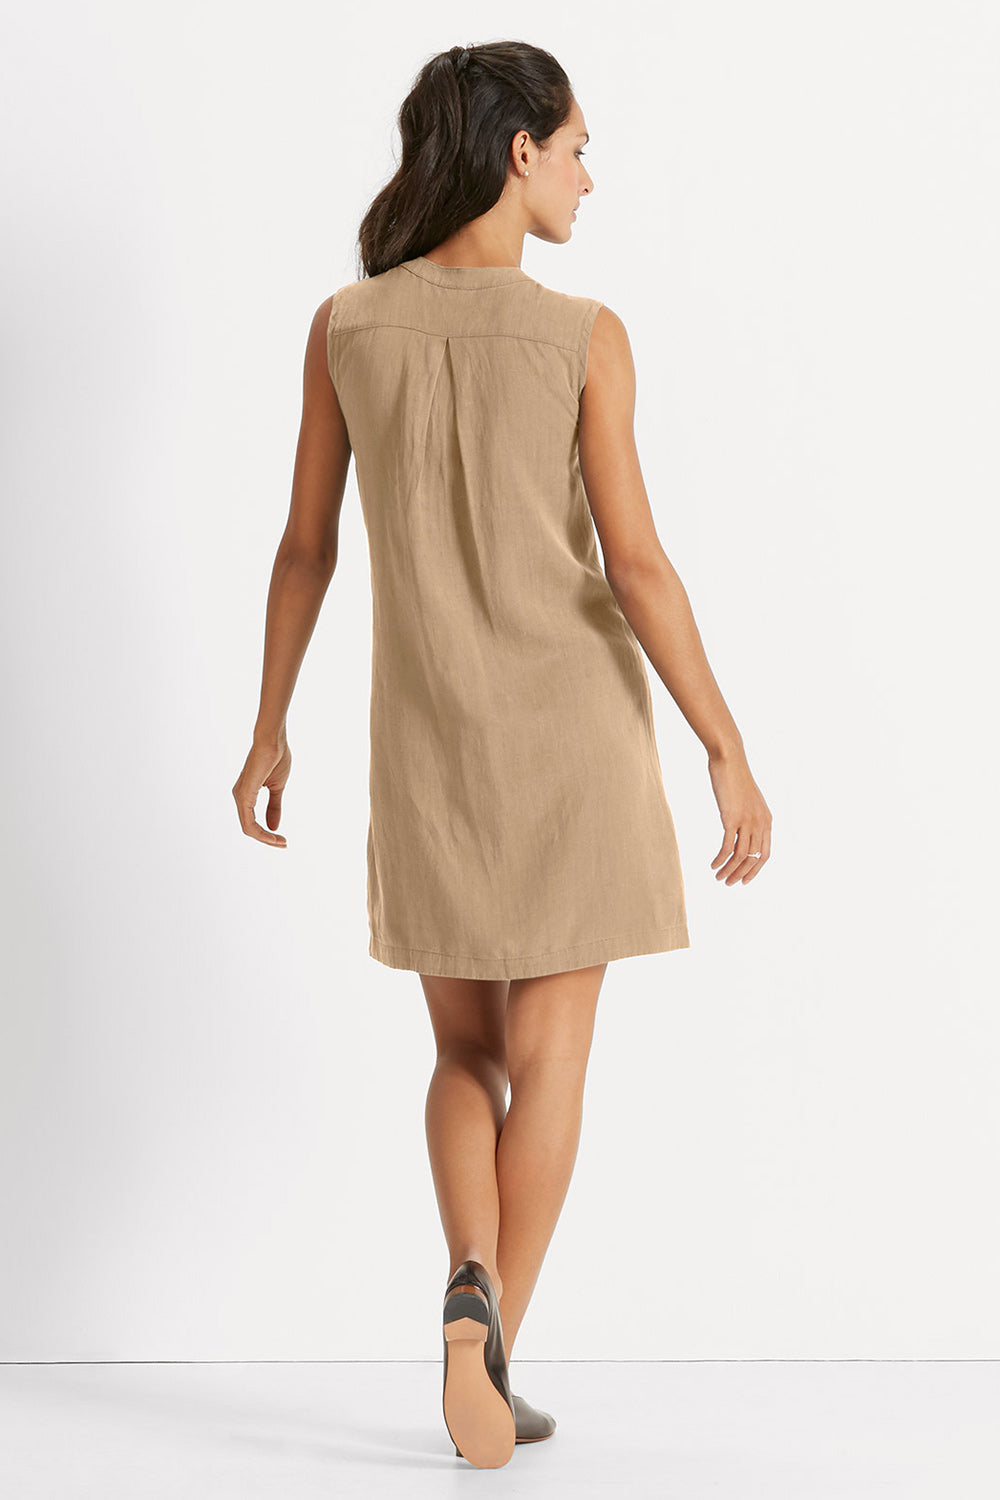 Flaxible Sleeveless Dress 1.0